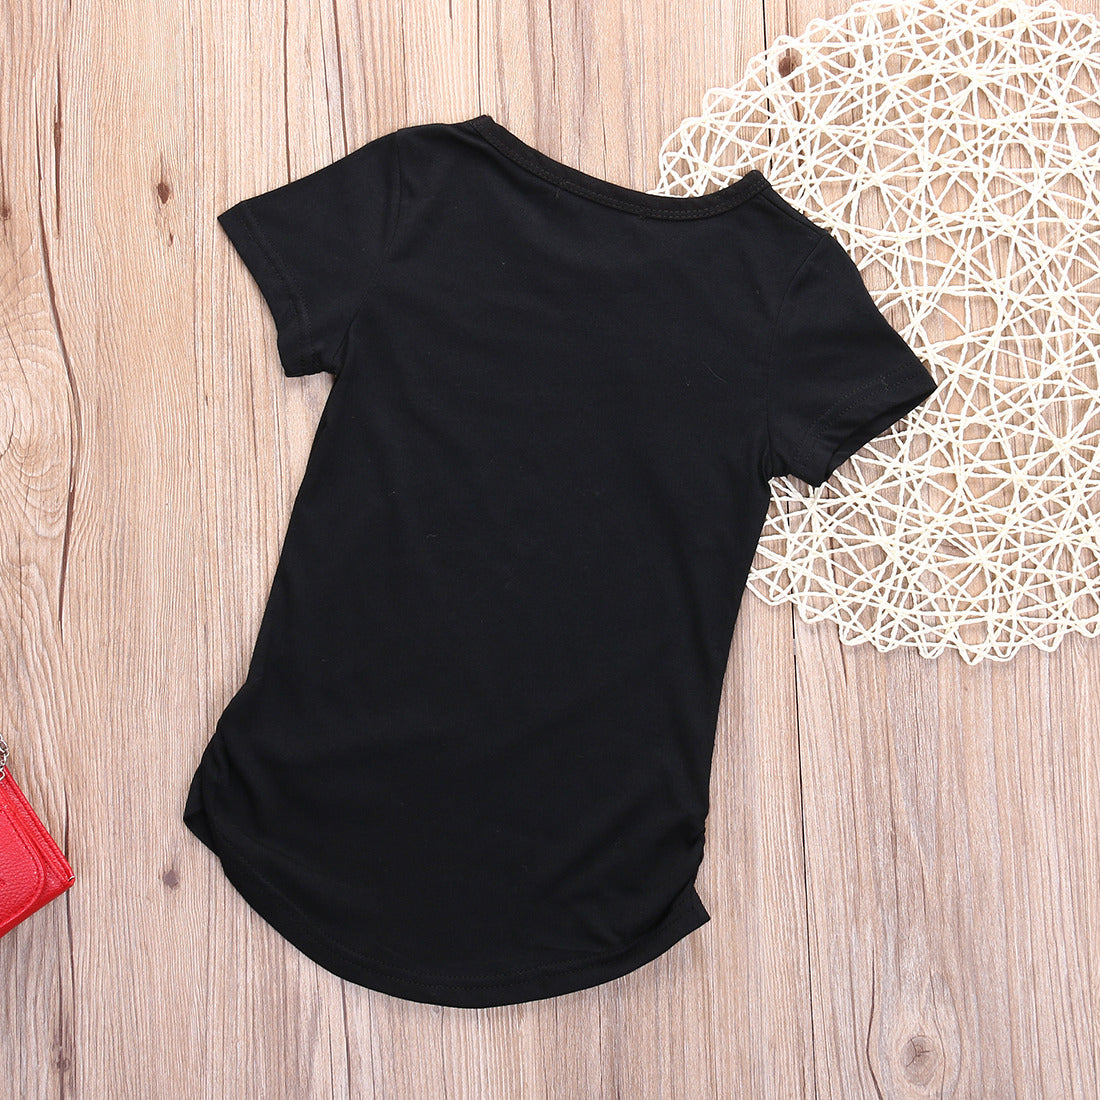 Fashion Design Baby Kids Girls Summer Short sleeve Cotton Tops Shirts Blouse Kids Casual Shirt Clothes 2-7T